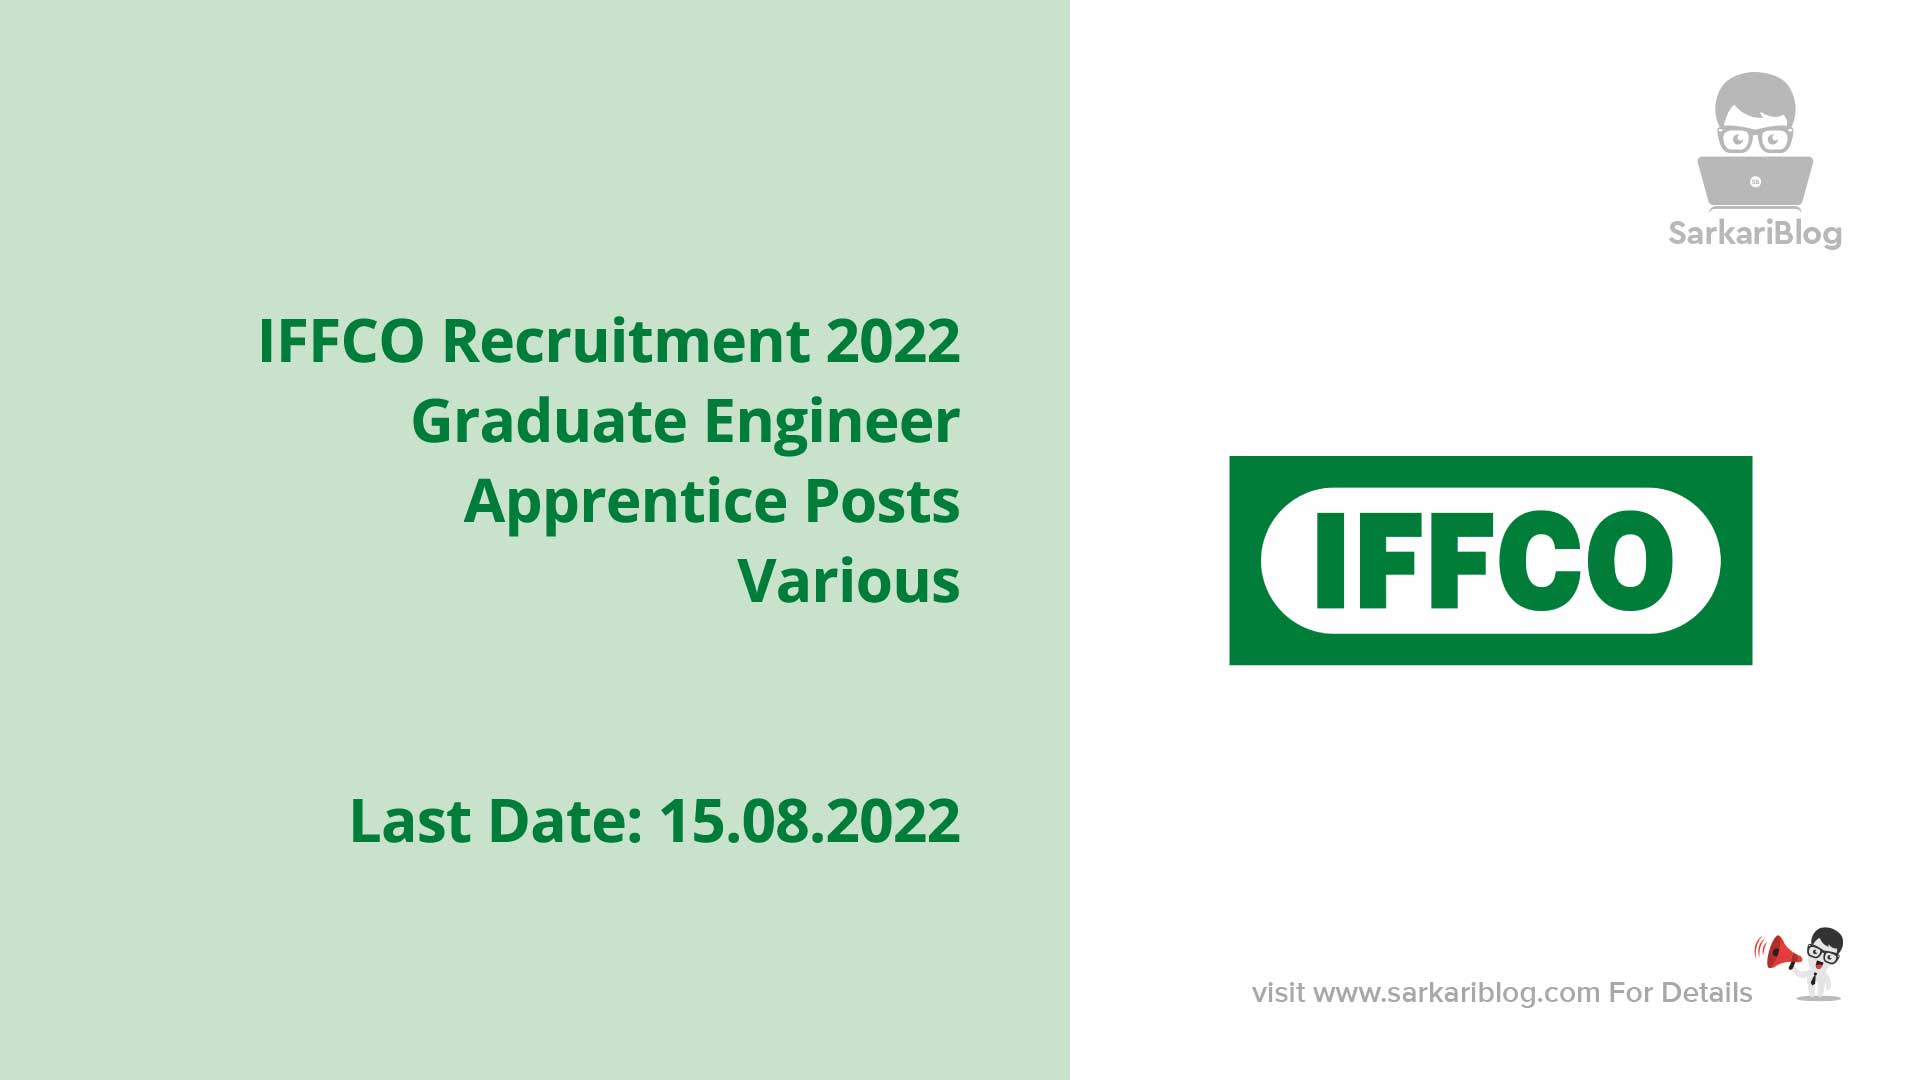 IFFCO GEA Recruitment 2022